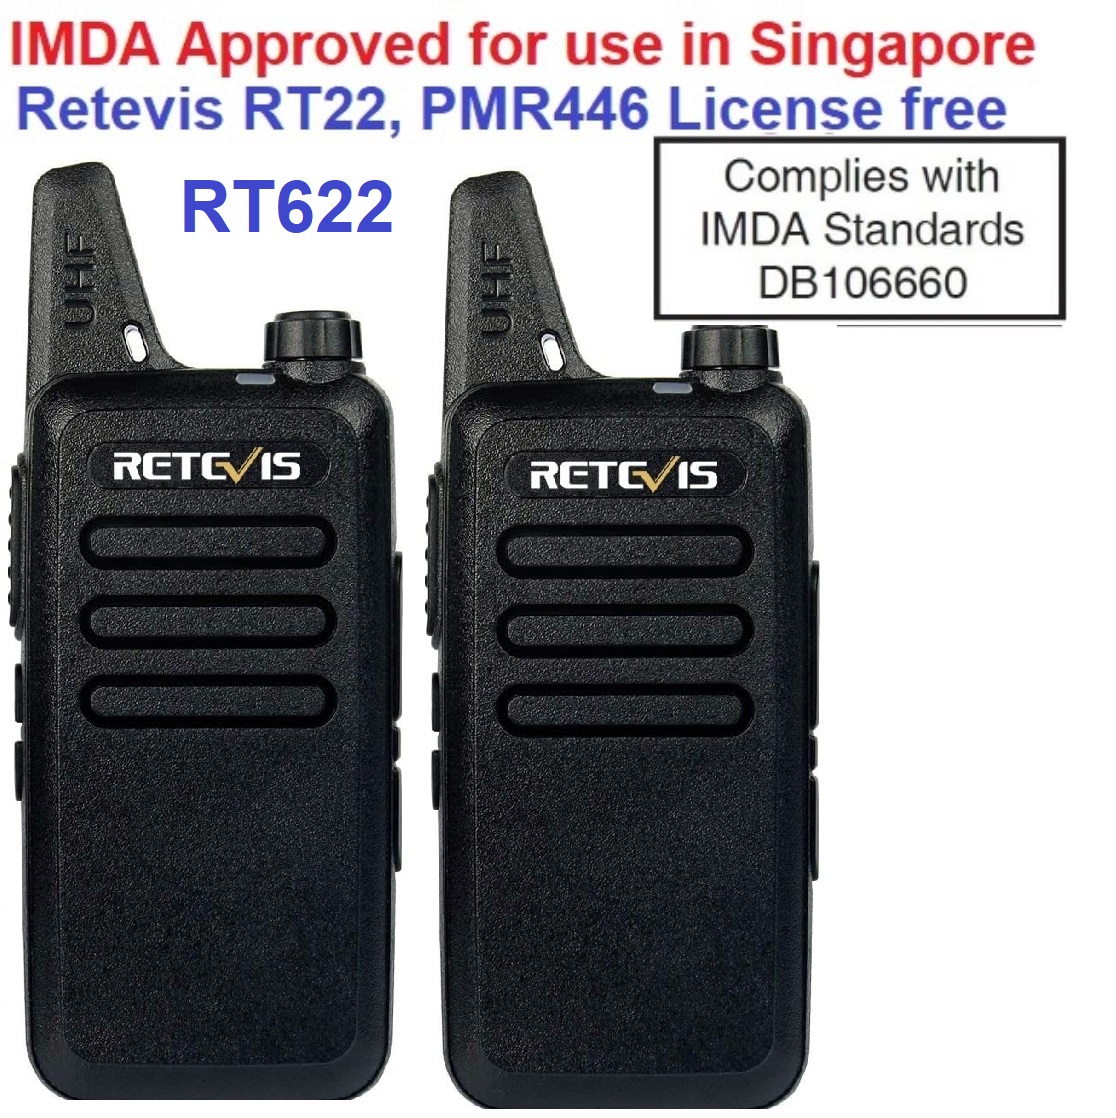 Singapore Stock! 2pcs (1 pair) IMDA approved, Classic License free PMR446  Military grade Retevis RT22/622 CAMO or BLACK (classic version)  UHF446.00625 MHz to 446.09375 MHz ultra slim powerful walkie talkie radio  USB